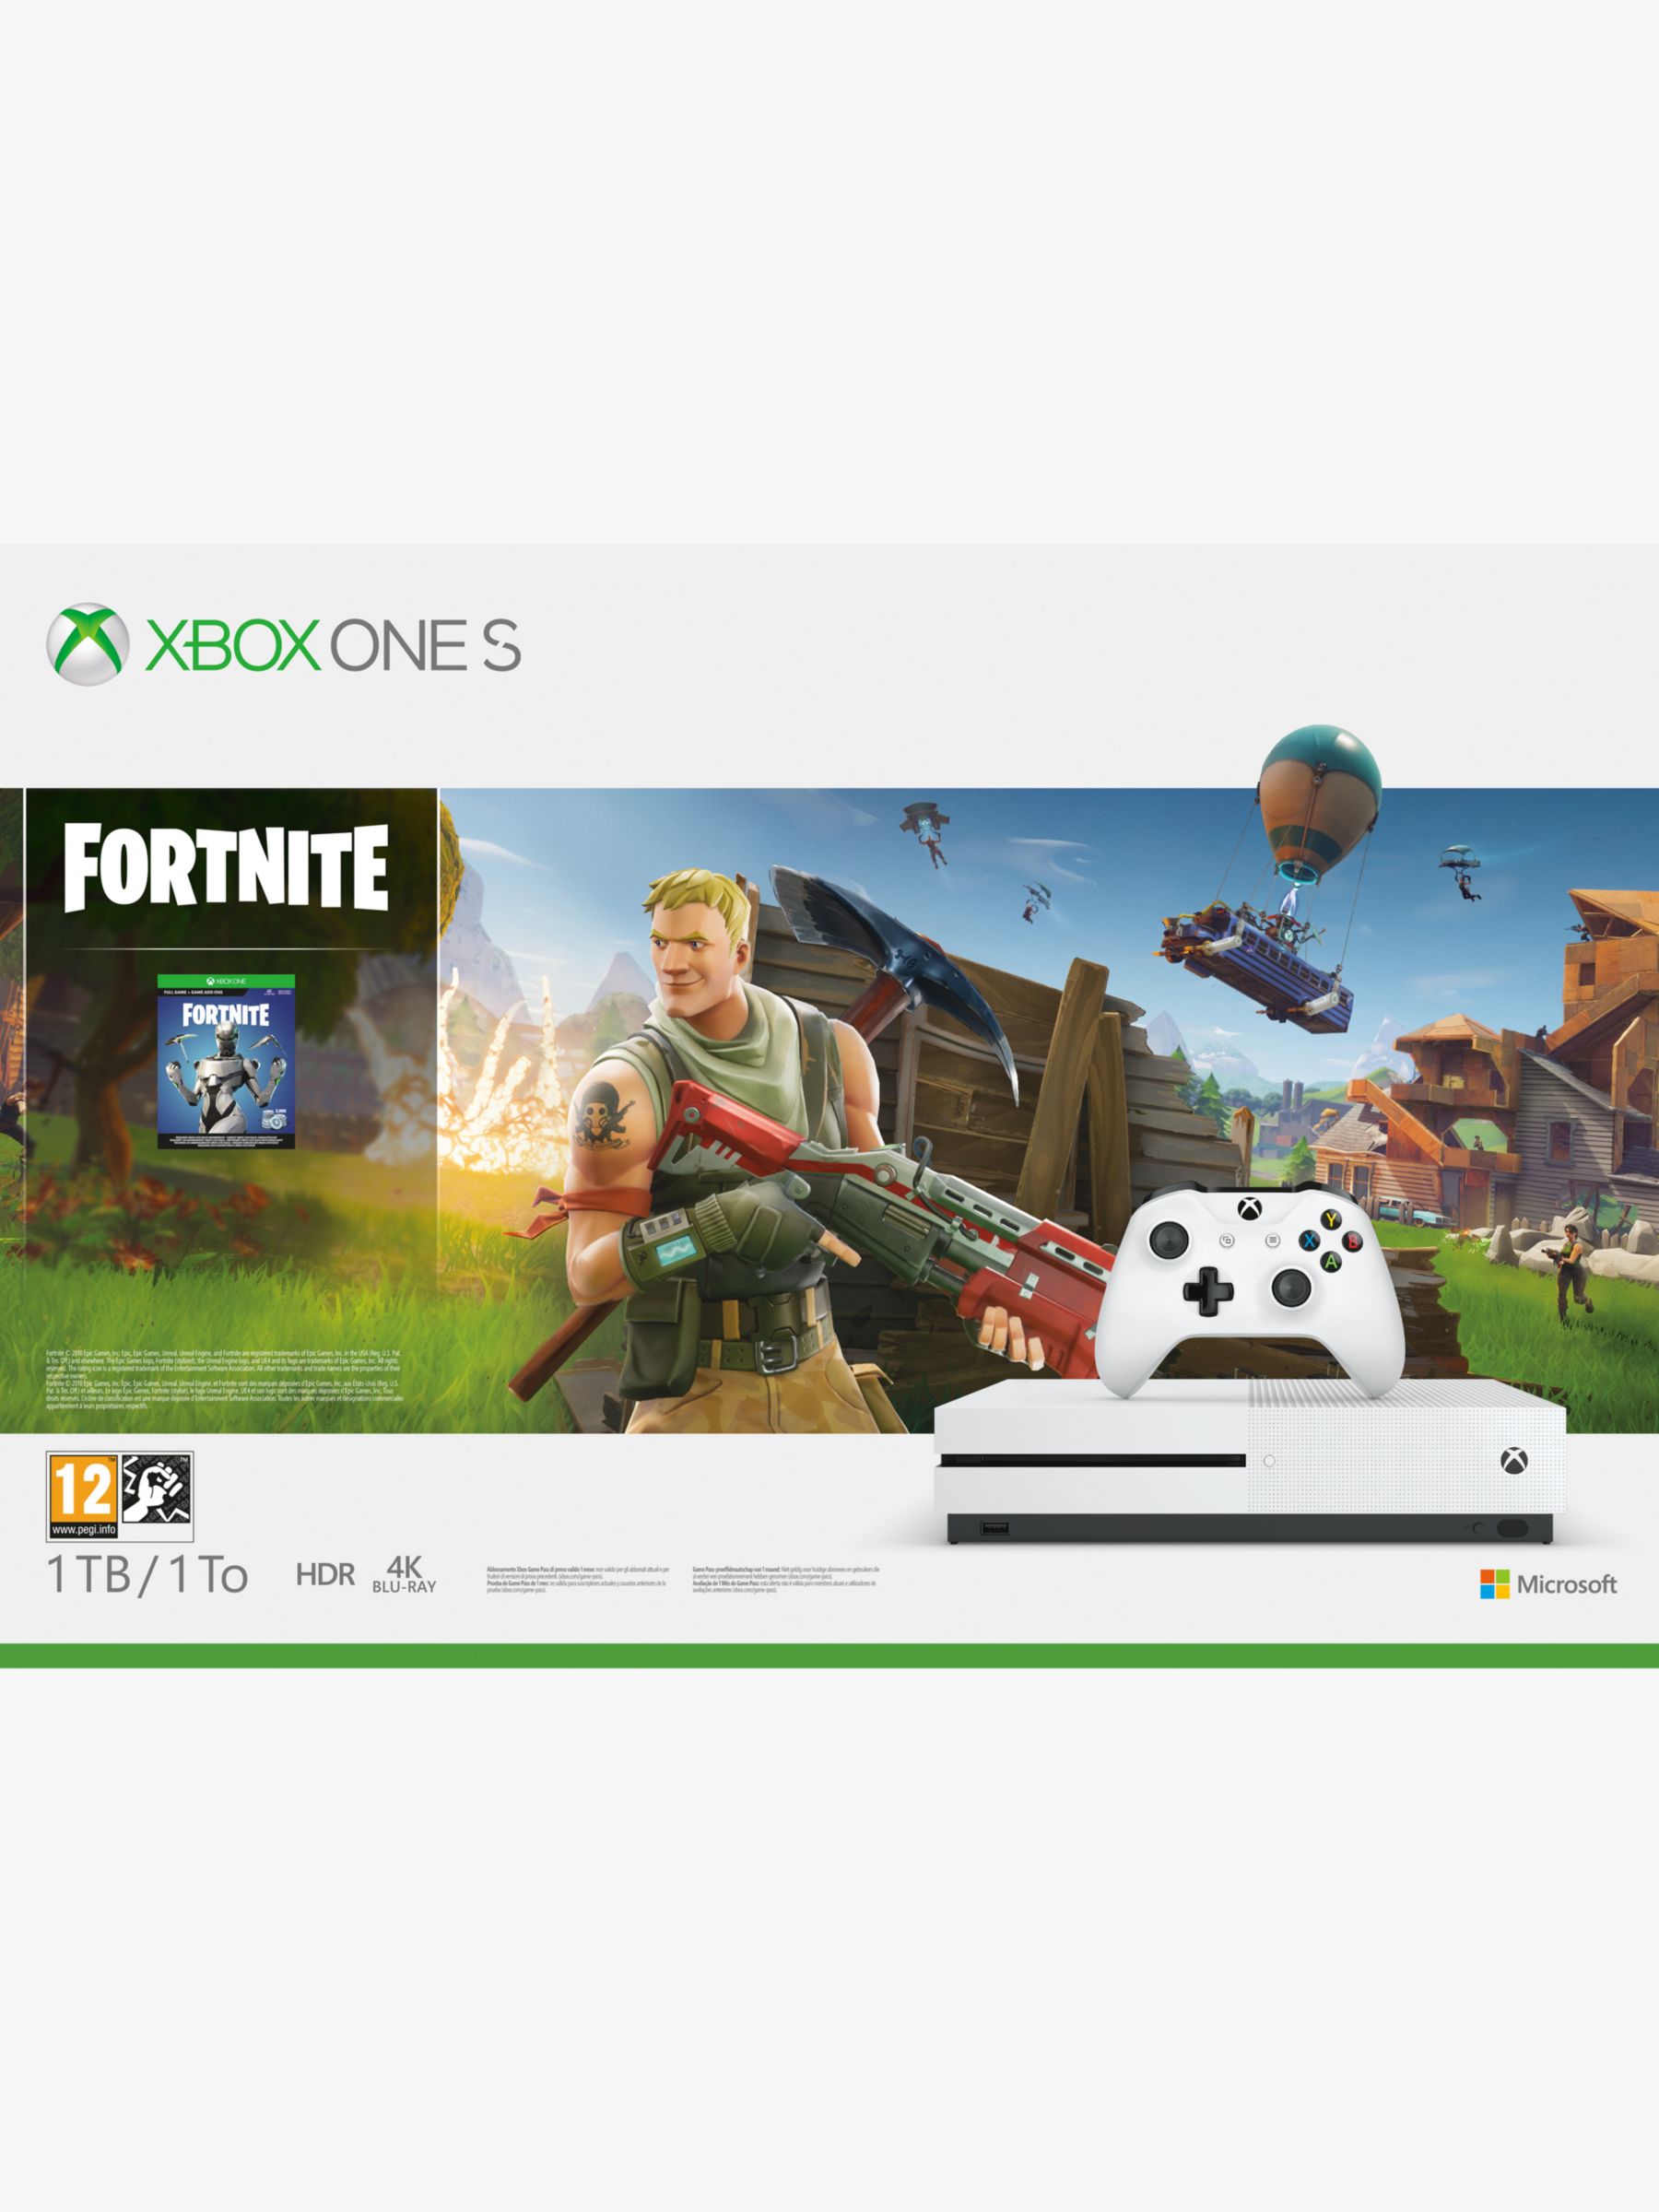 Is Fortnite Free On Xbox One